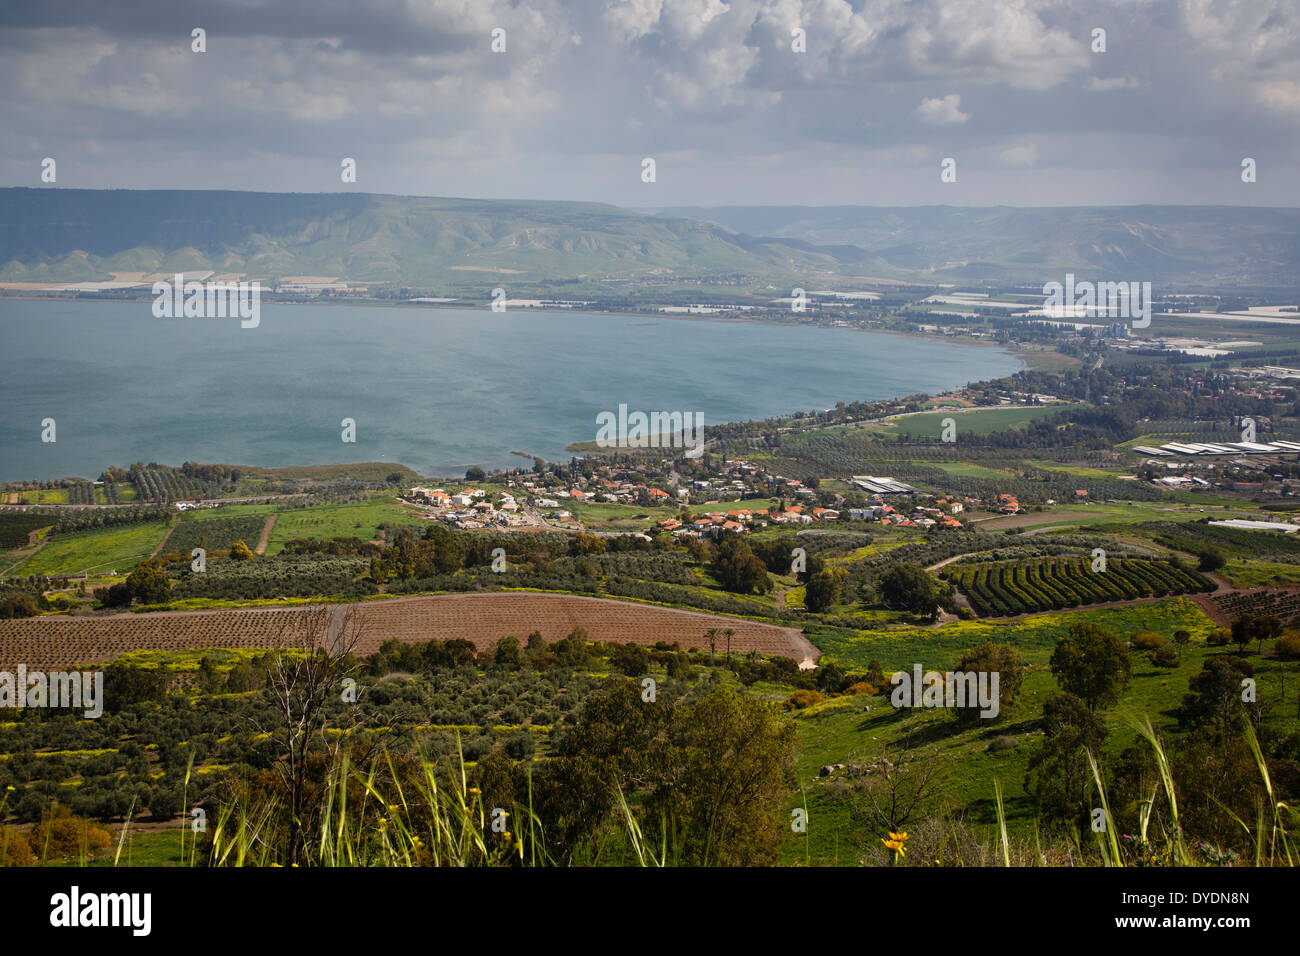 Vue sur la mer de Galilée - Le lac de Tibériade, Israël. Banque D'Images